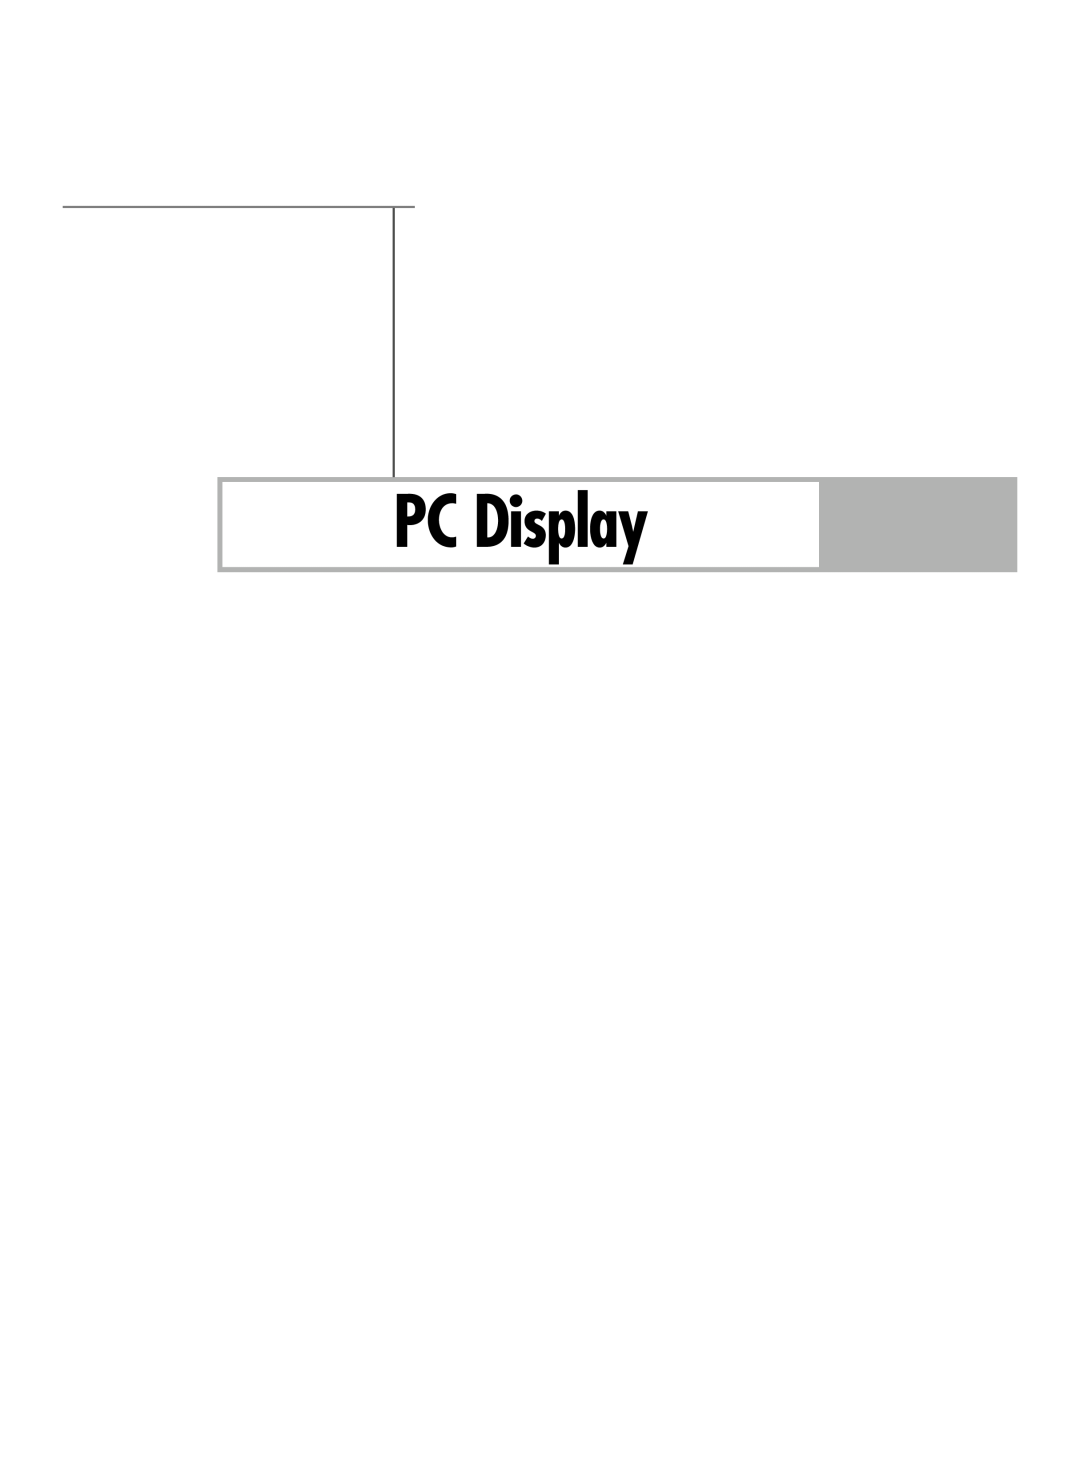 Samsung HL-R5688W manual PC Display 